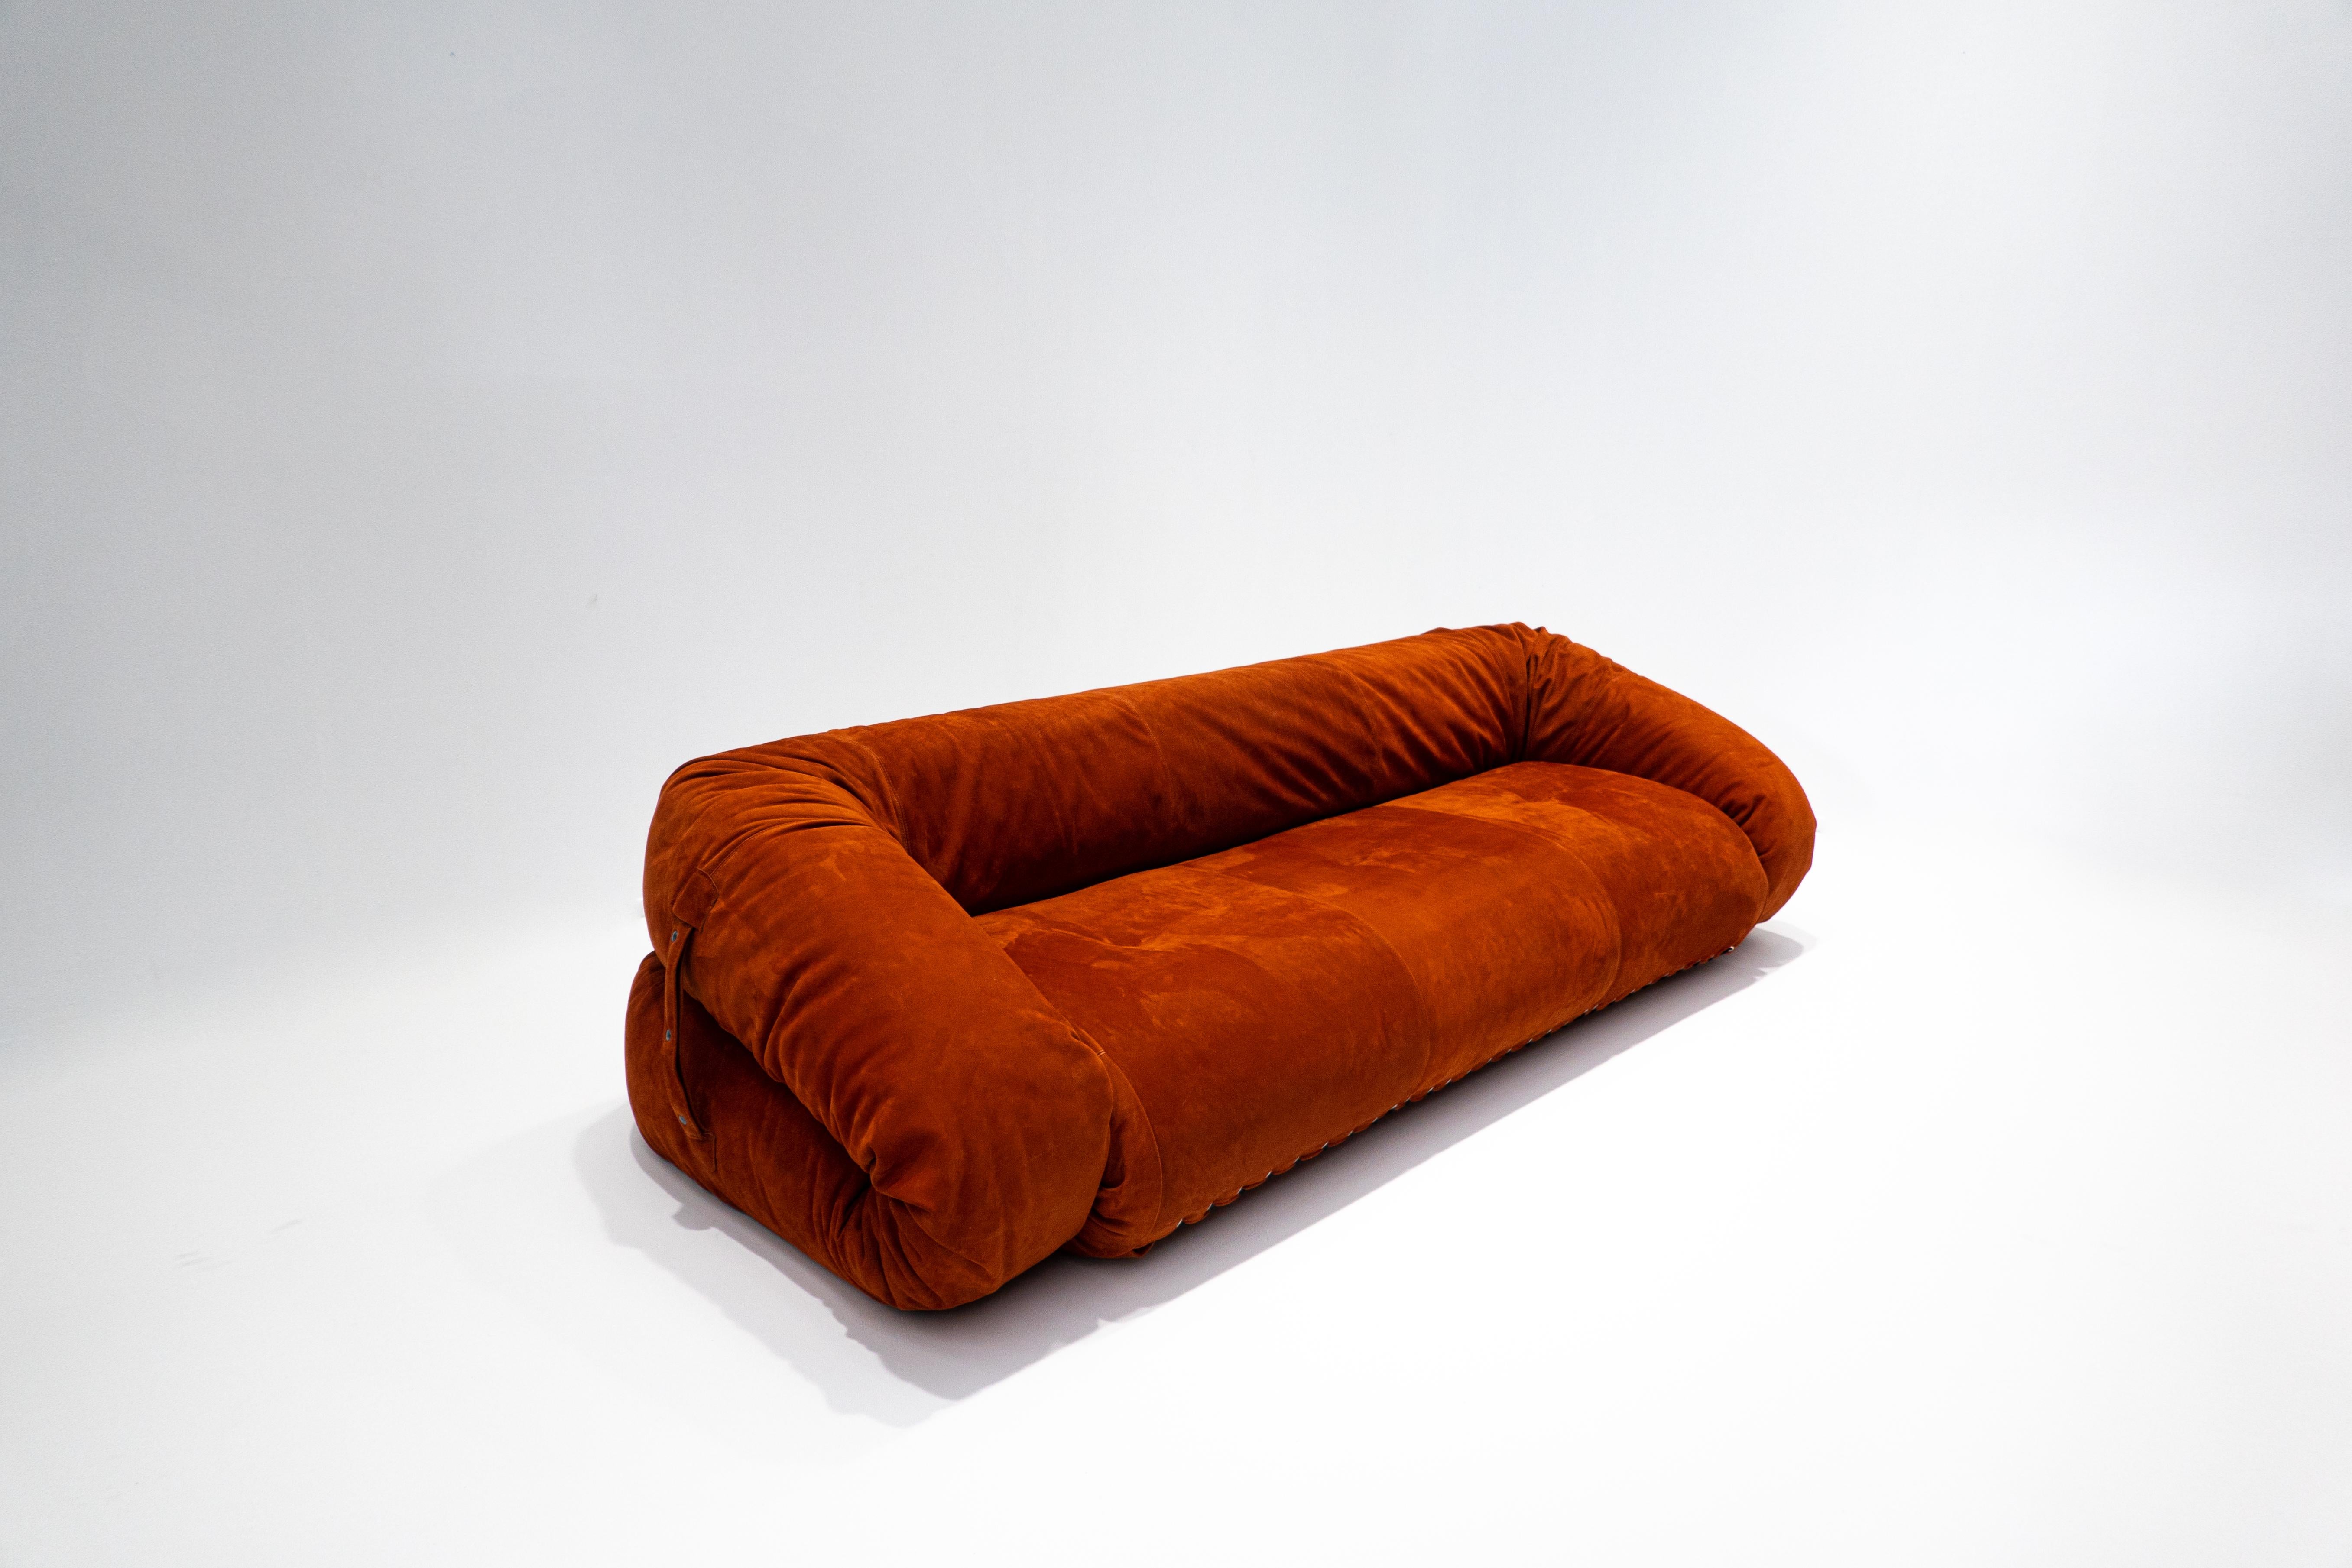 Anfibio sofa bed by Alessandro Becchi for Giovannetti Collezioni, Orange, 1970s

Reupholstered in orange suede.